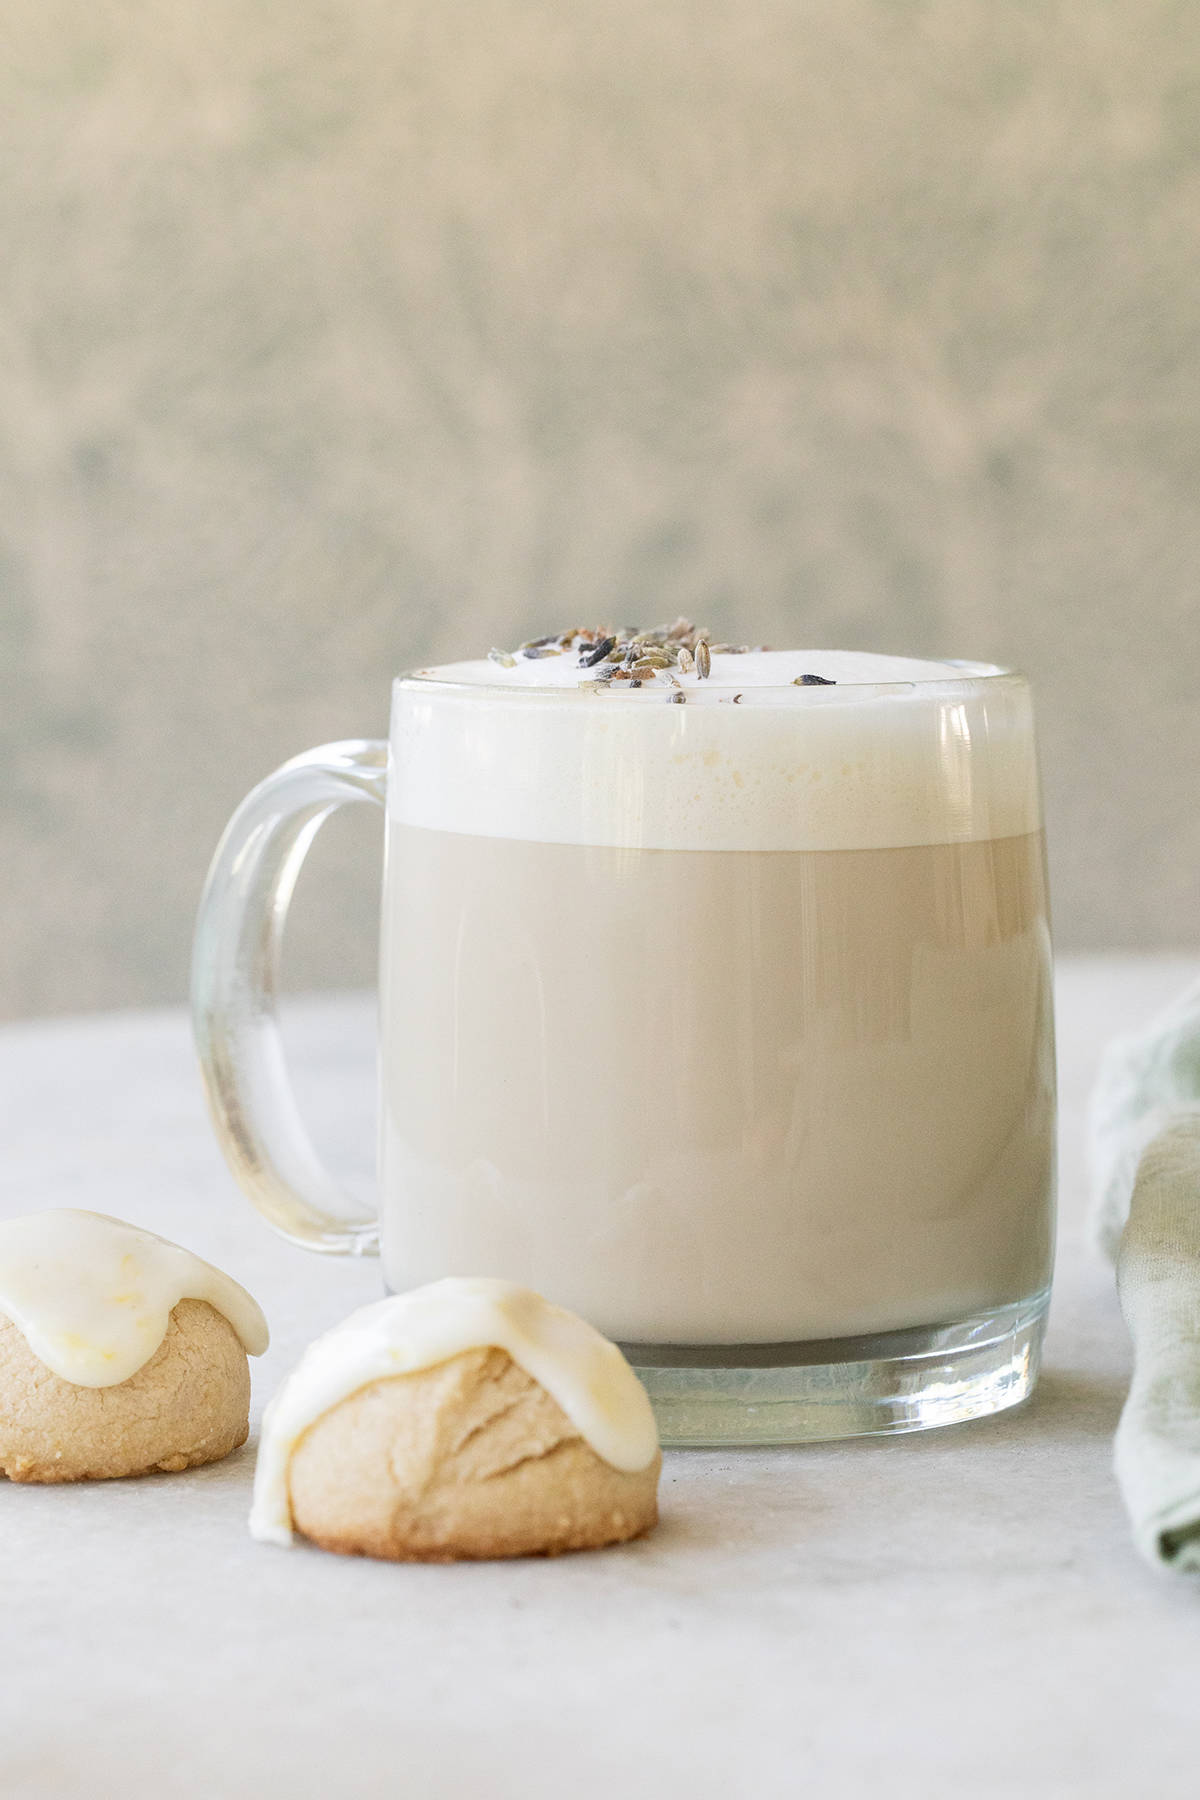 Creamy, frothy London fog latte with little lemon cookies.